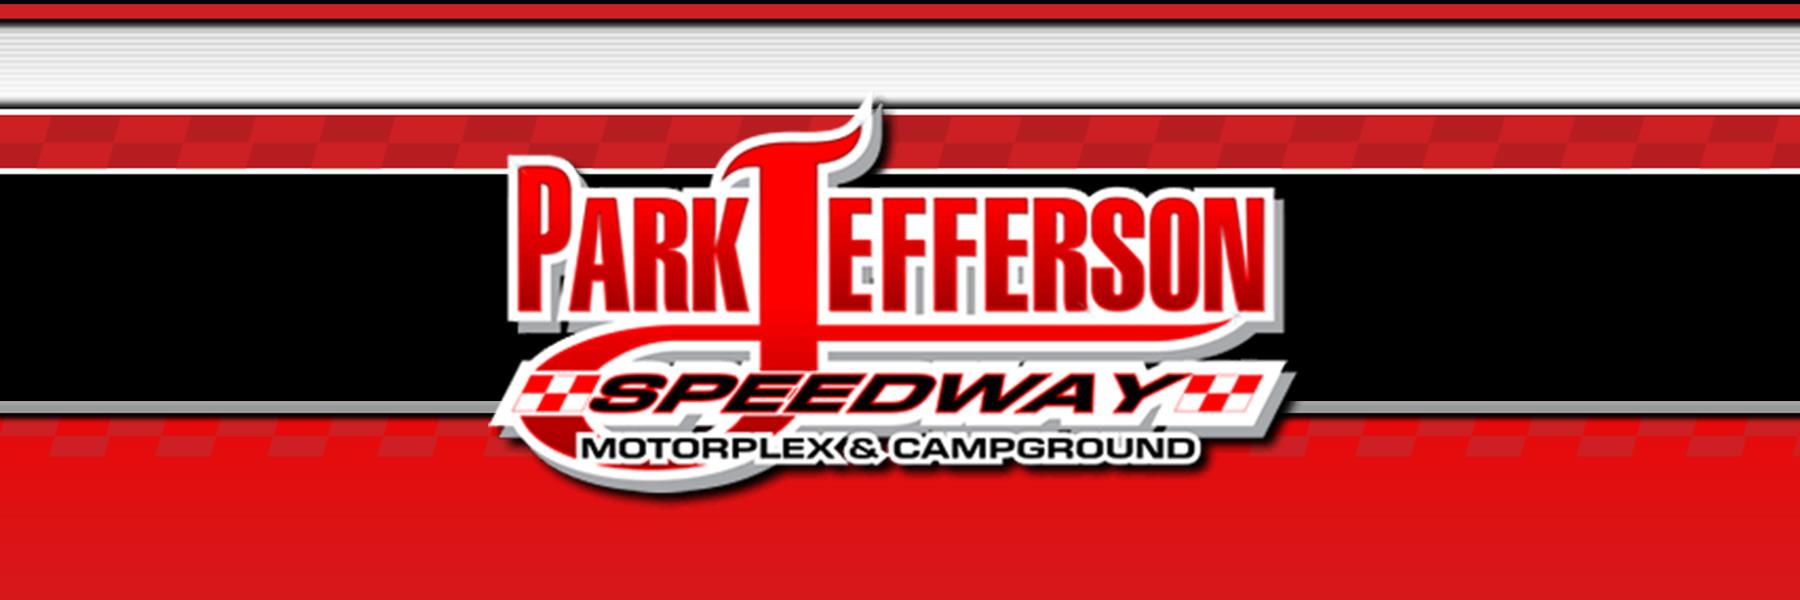 7/2/2022 - Park Jefferson International Speedway